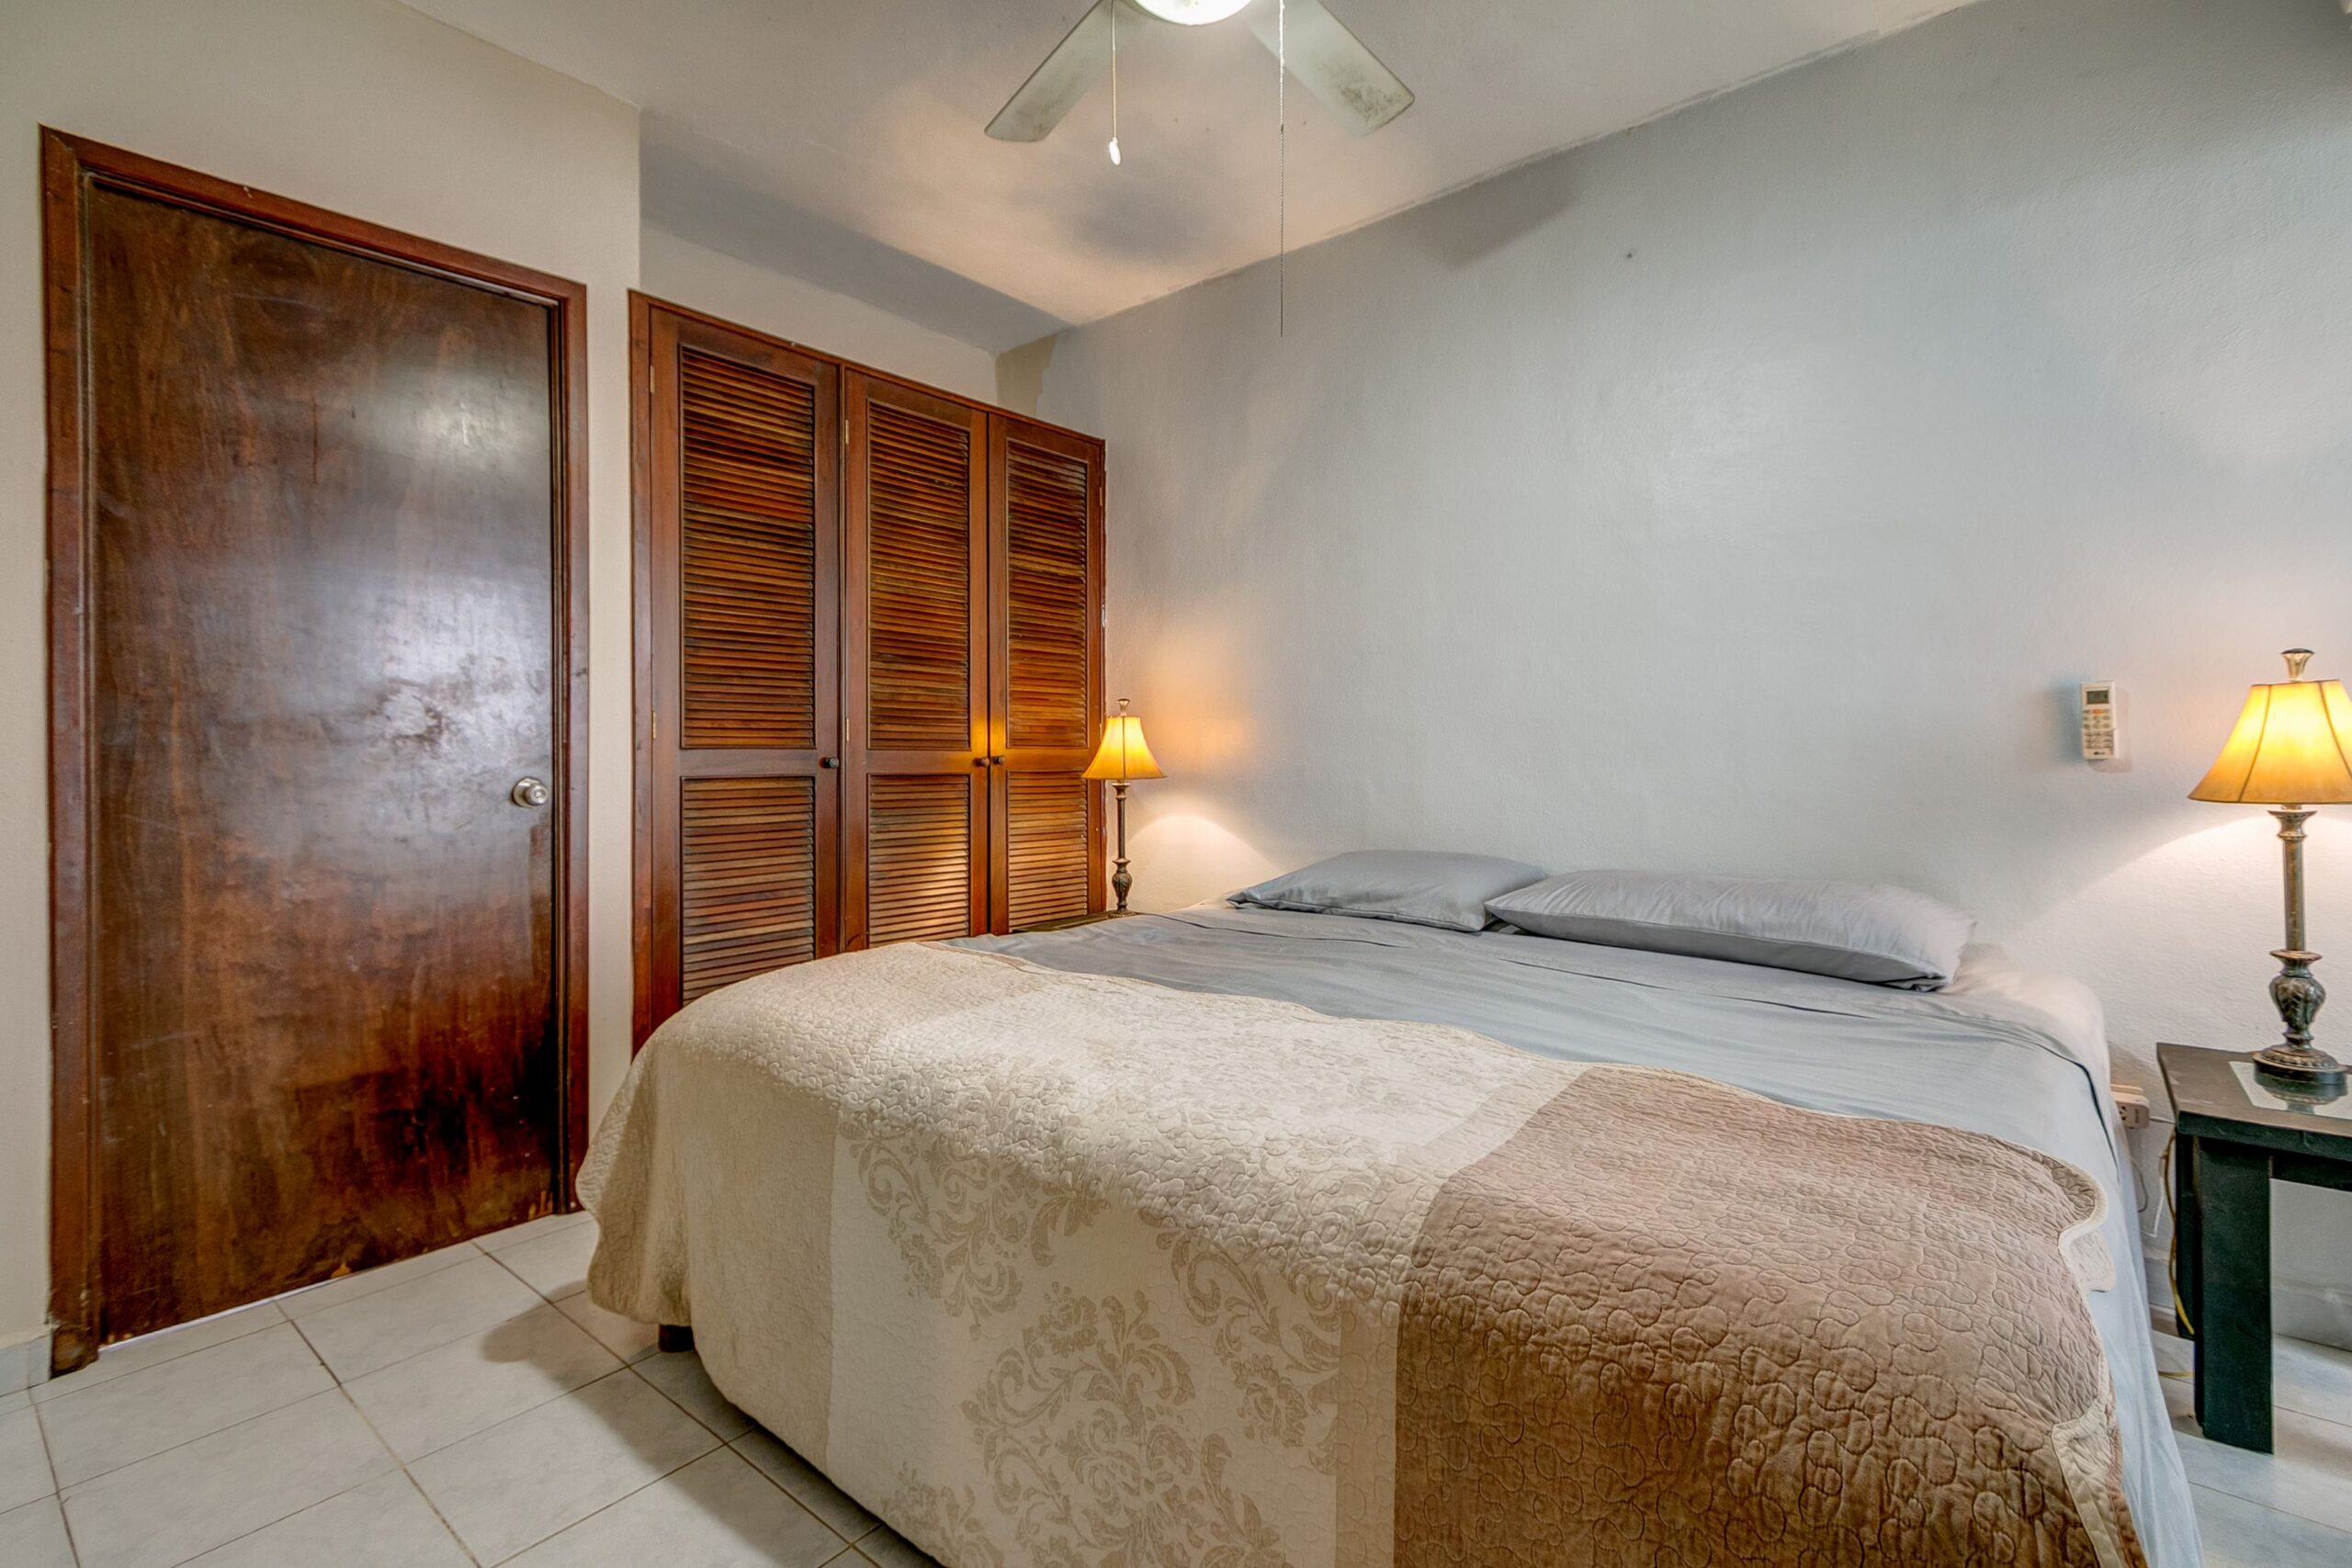 g apartment for sale in playacar gaviotas master bedroom